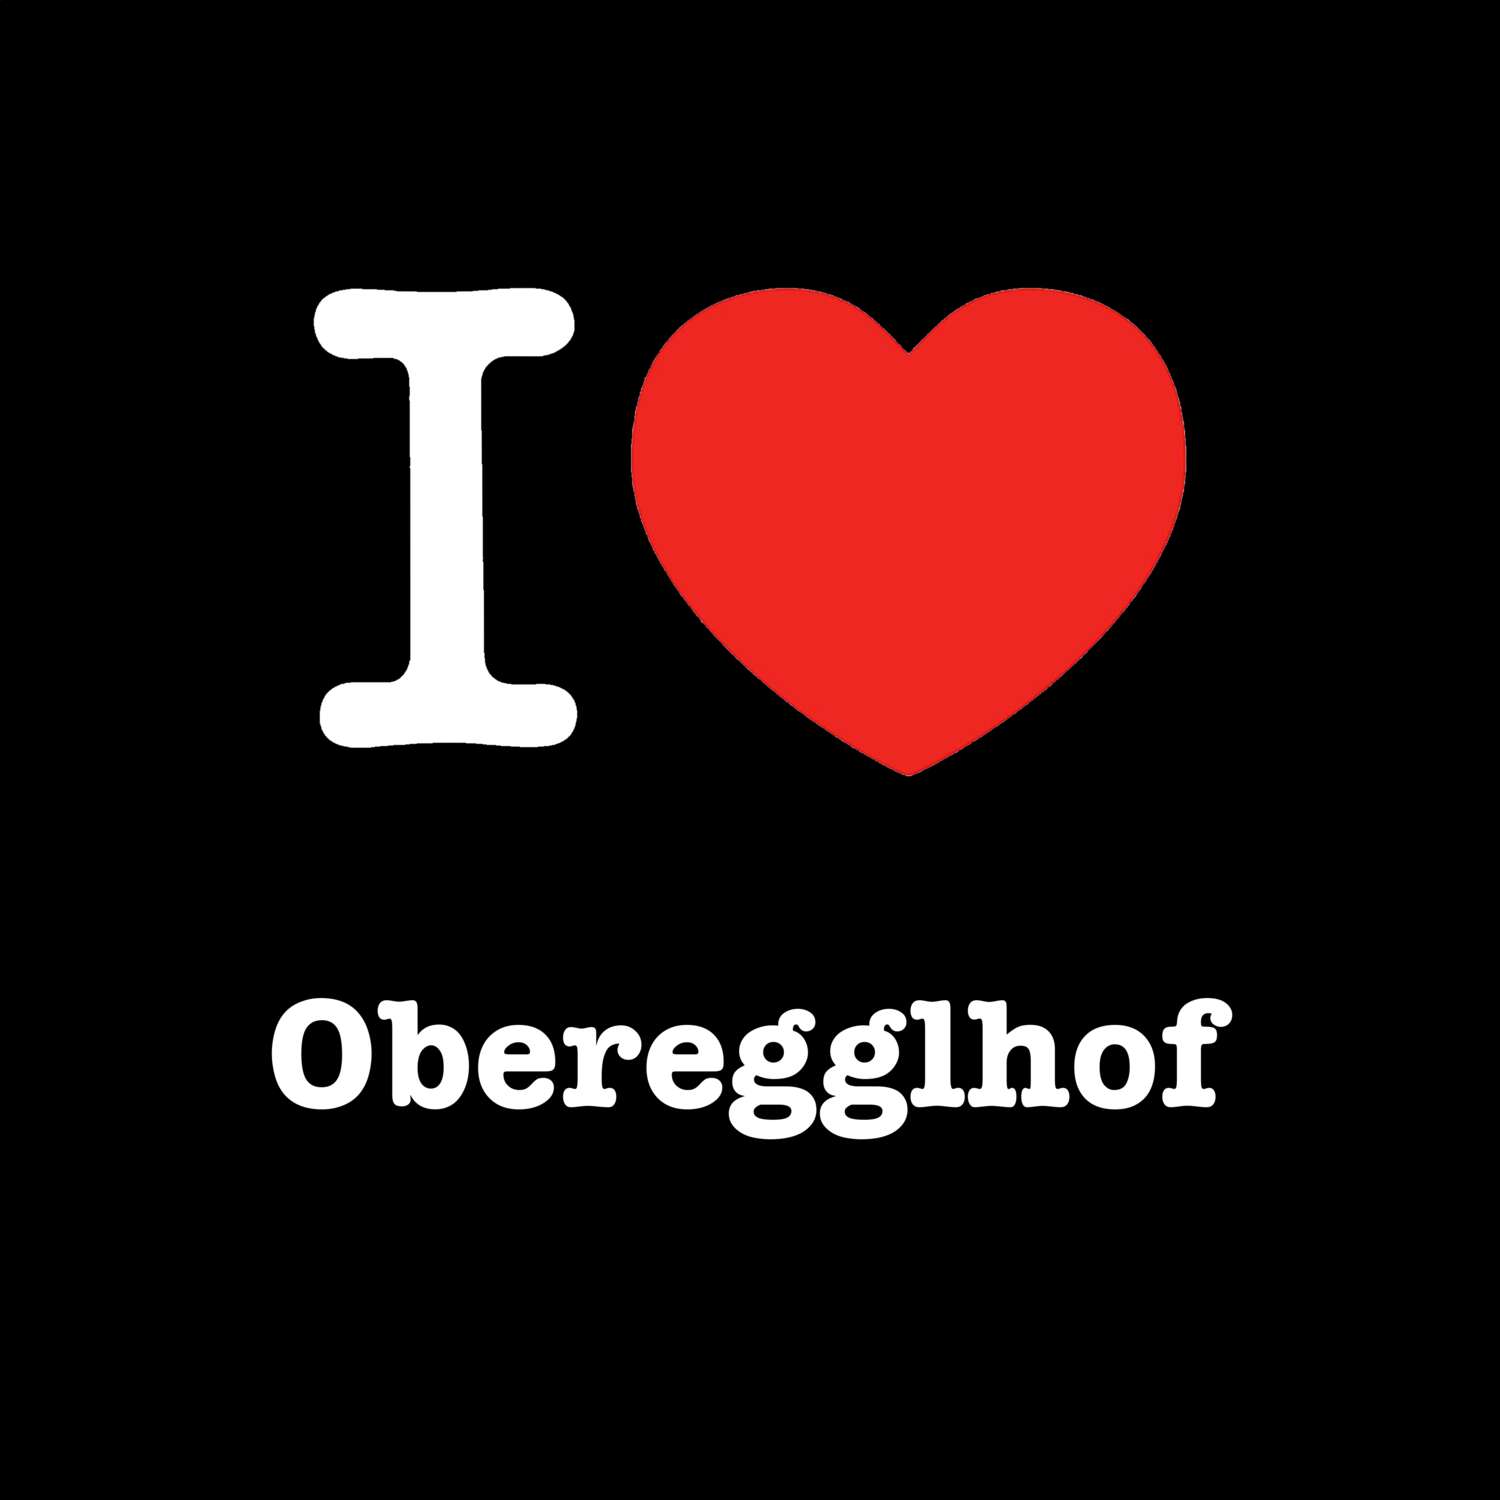 Oberegglhof T-Shirt »I love«